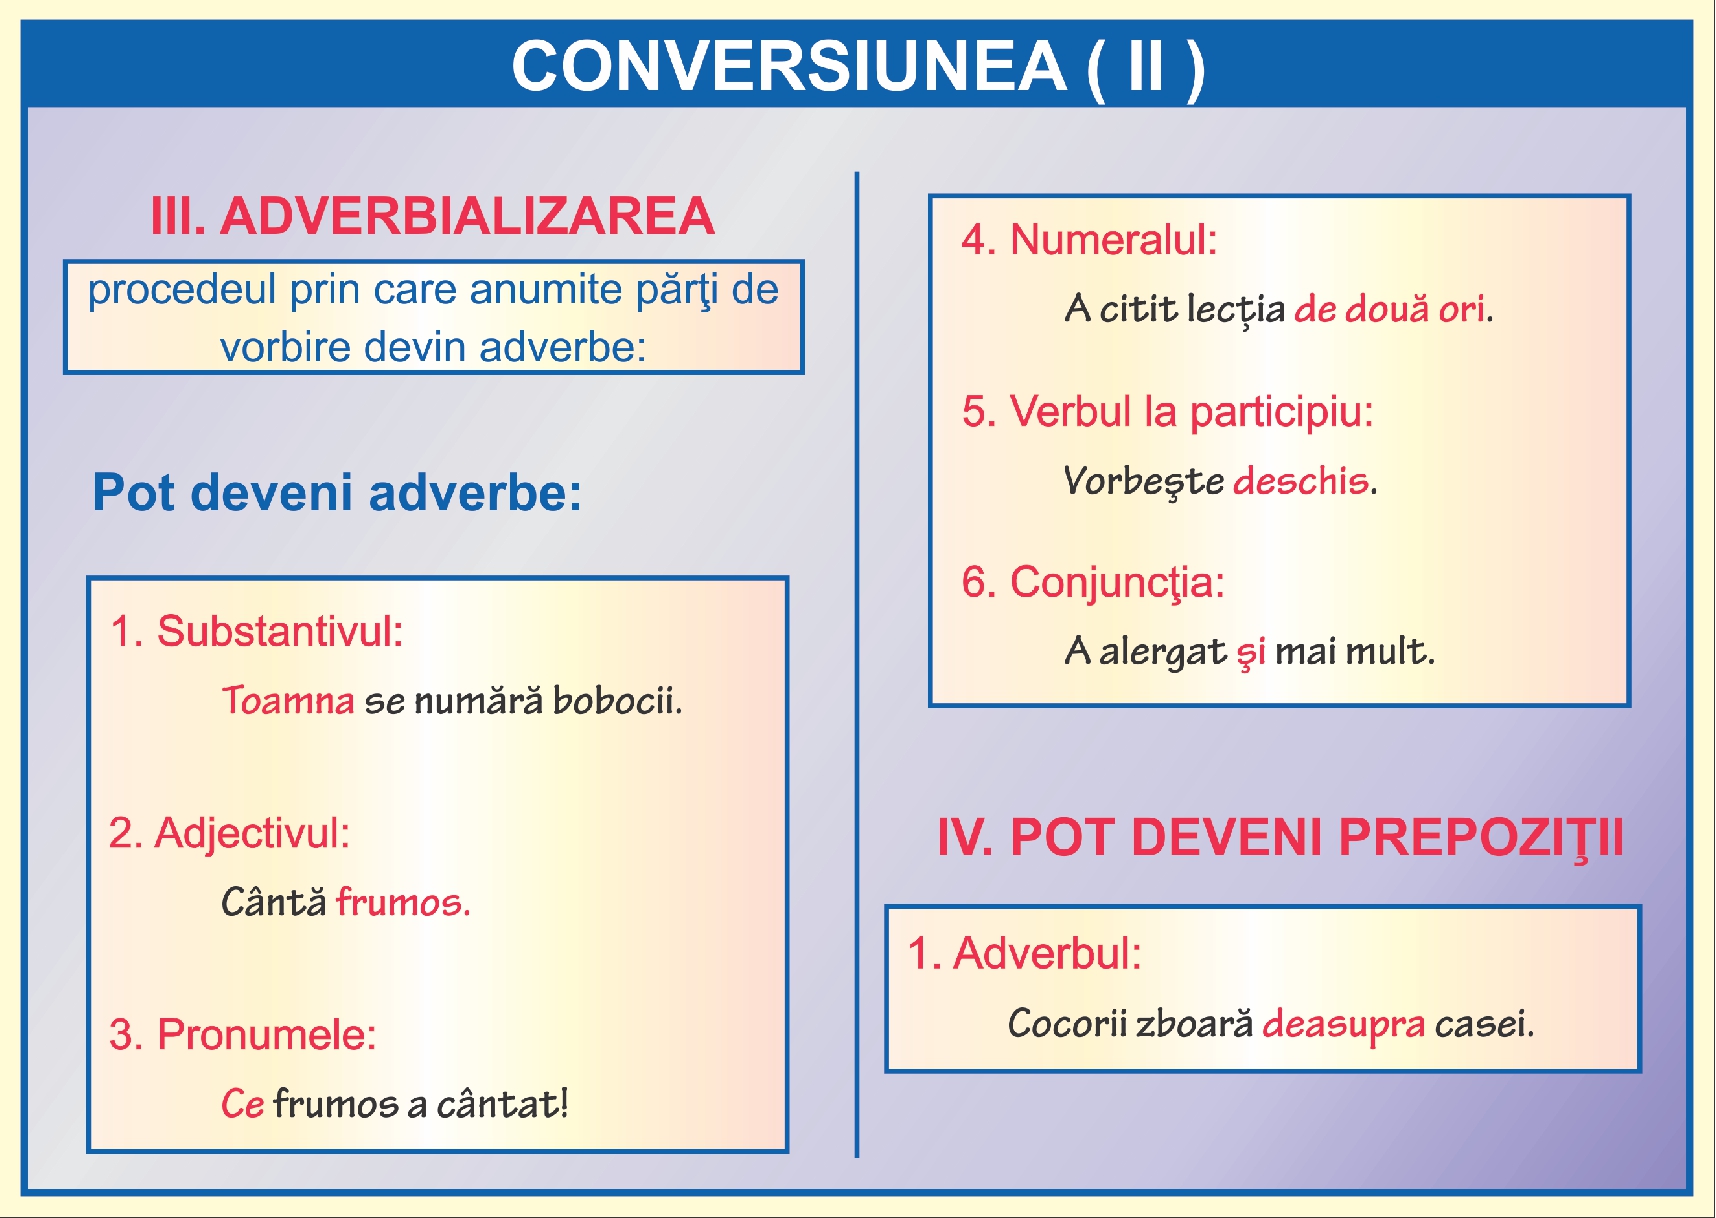 Conversiunea - II